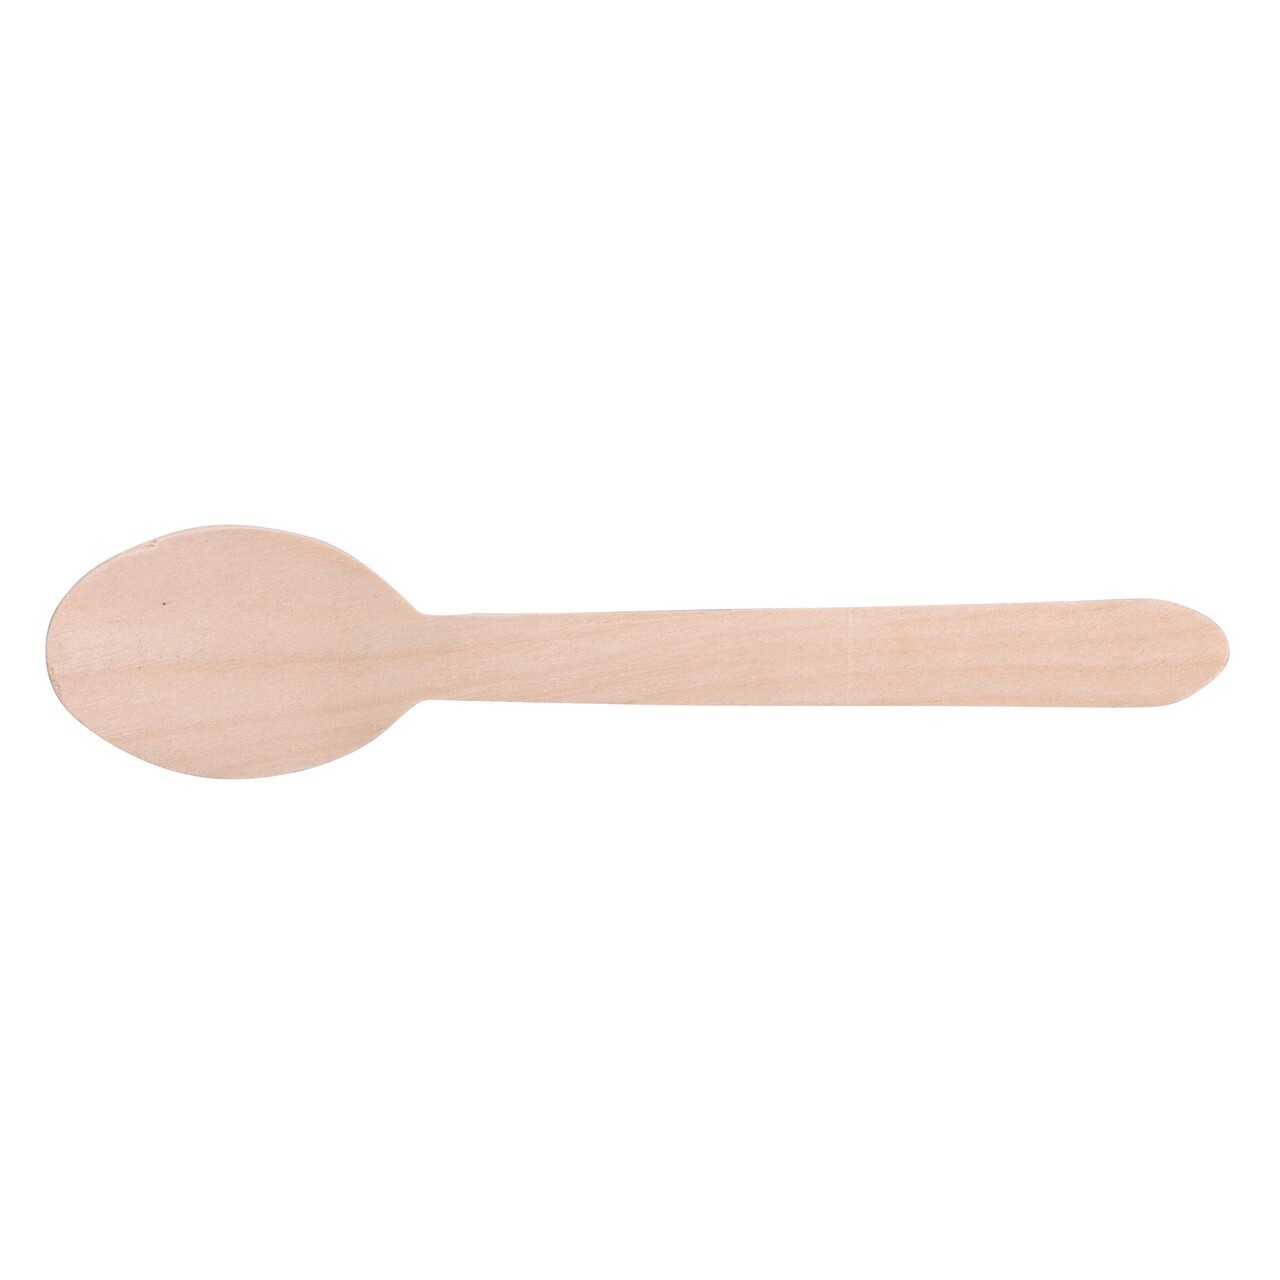 Birch Spoon 16Cm - Set Of 25